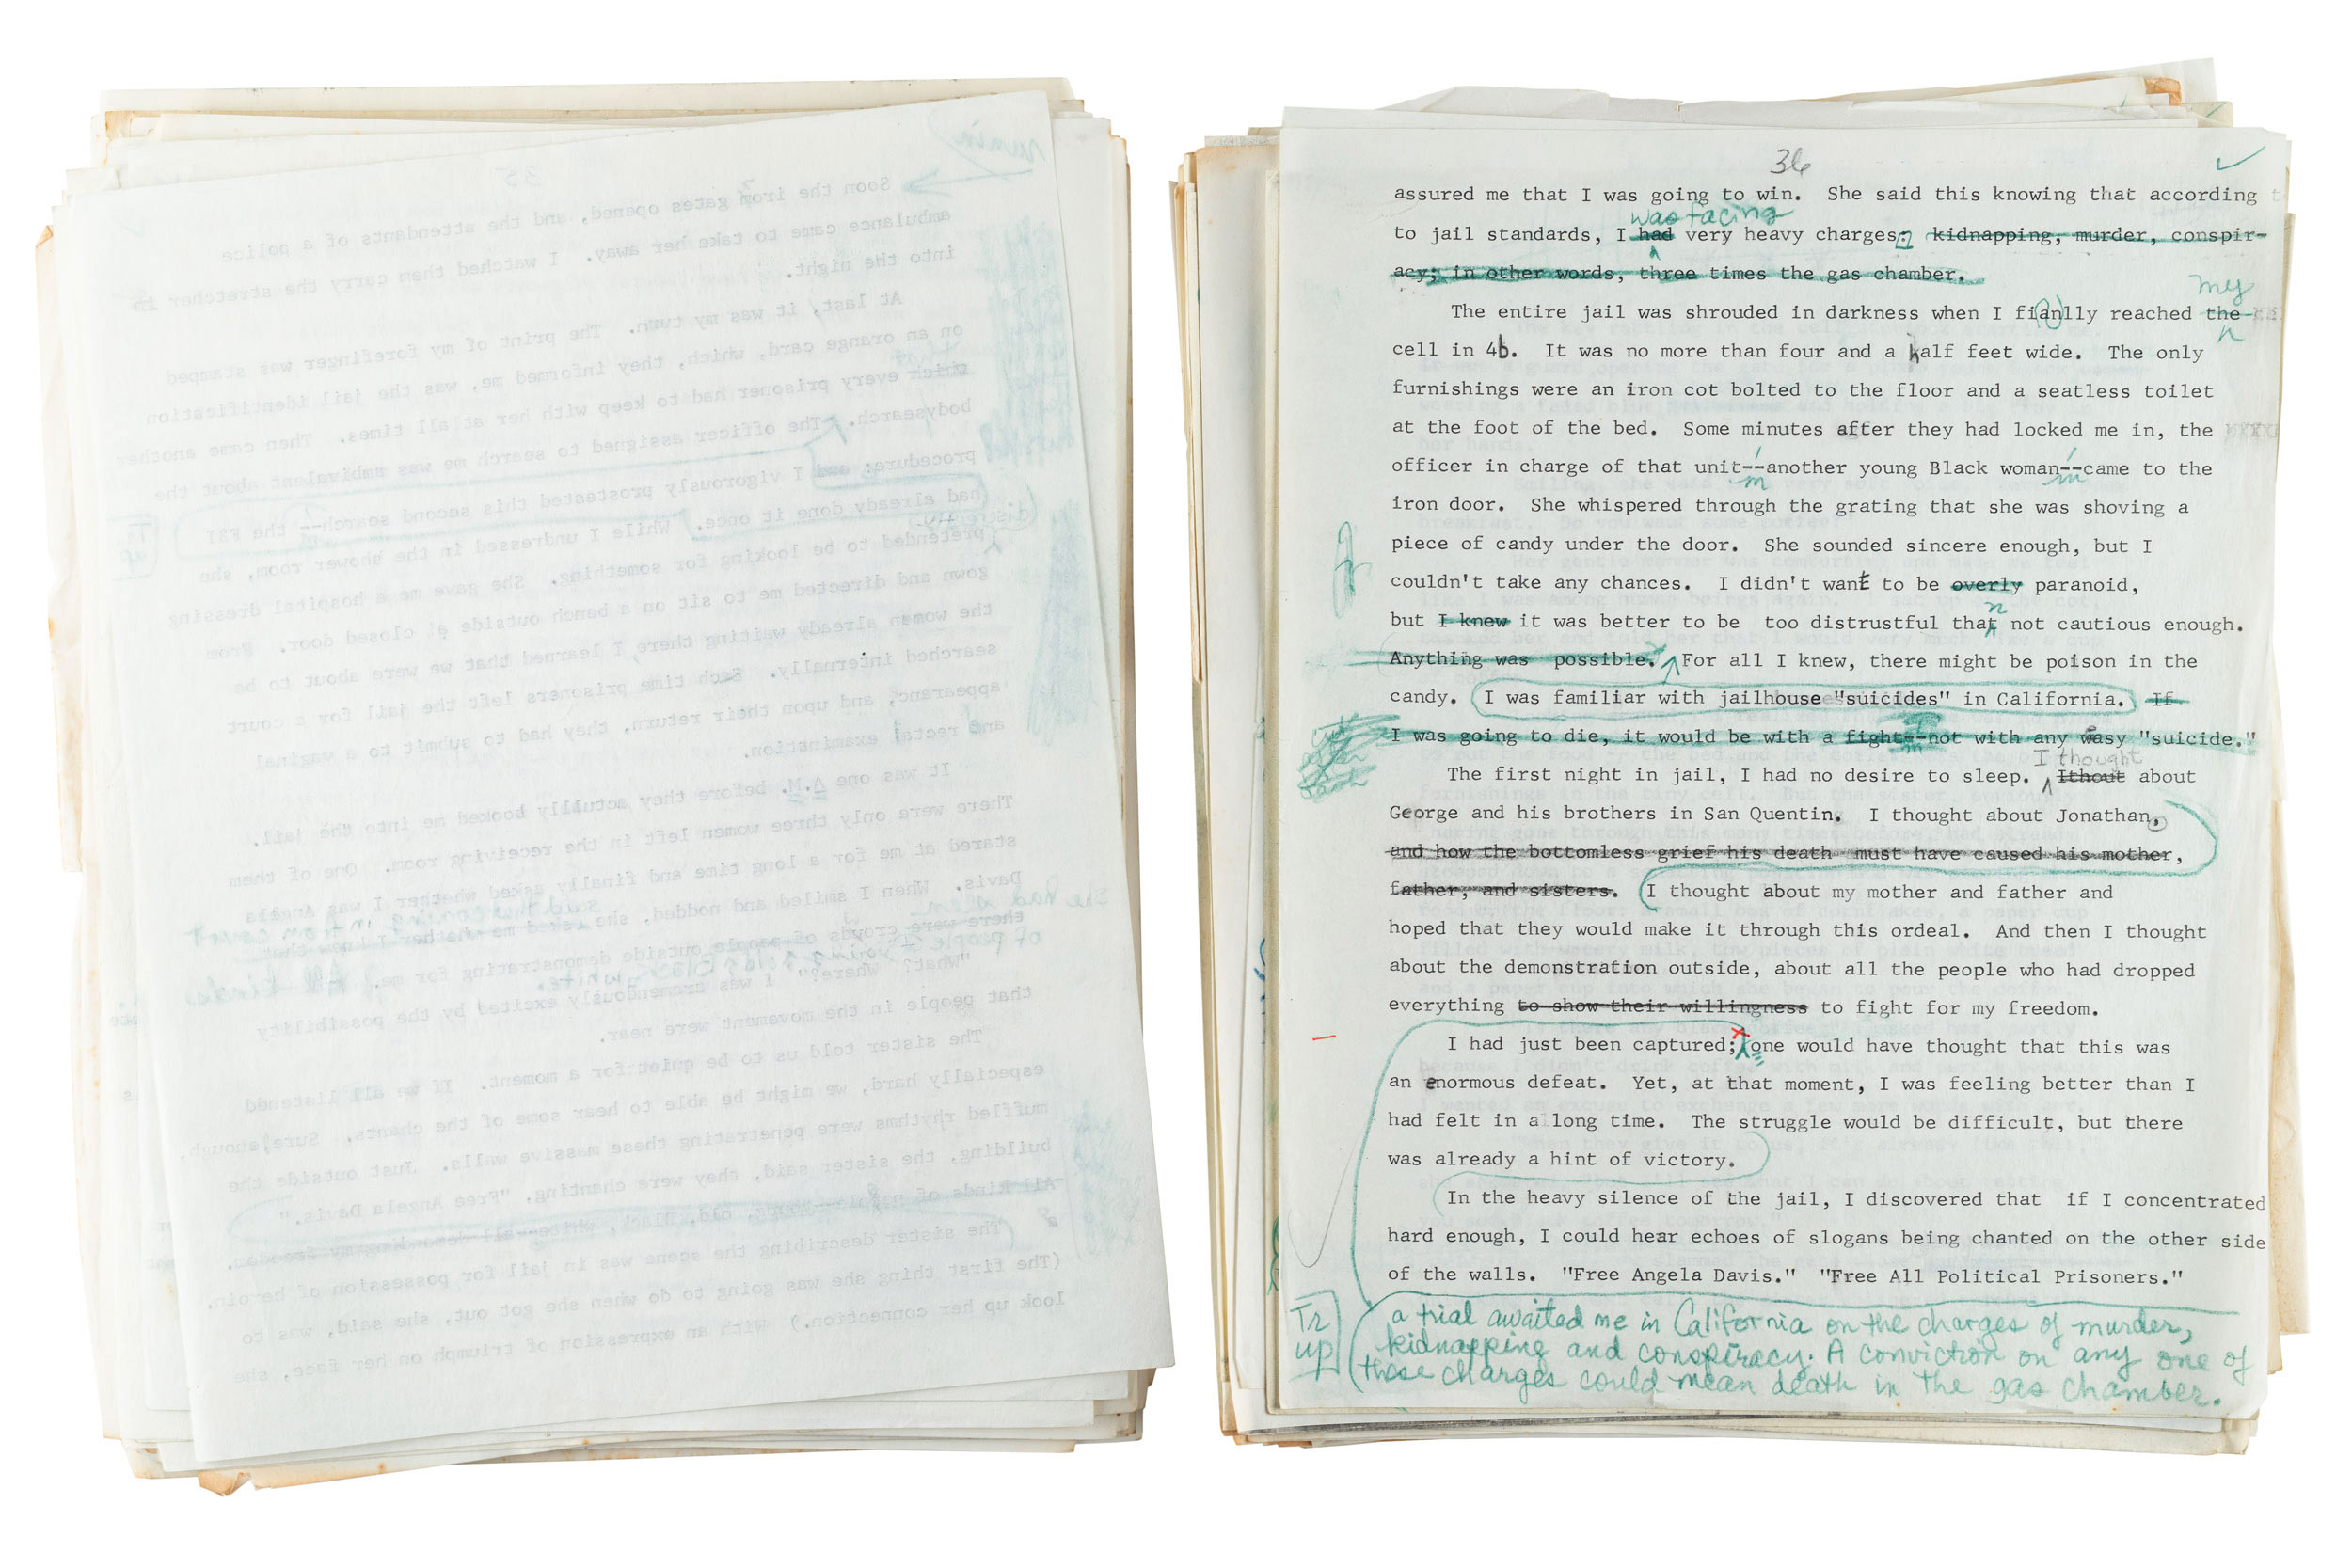 A manuscript with edits written in blue pen.